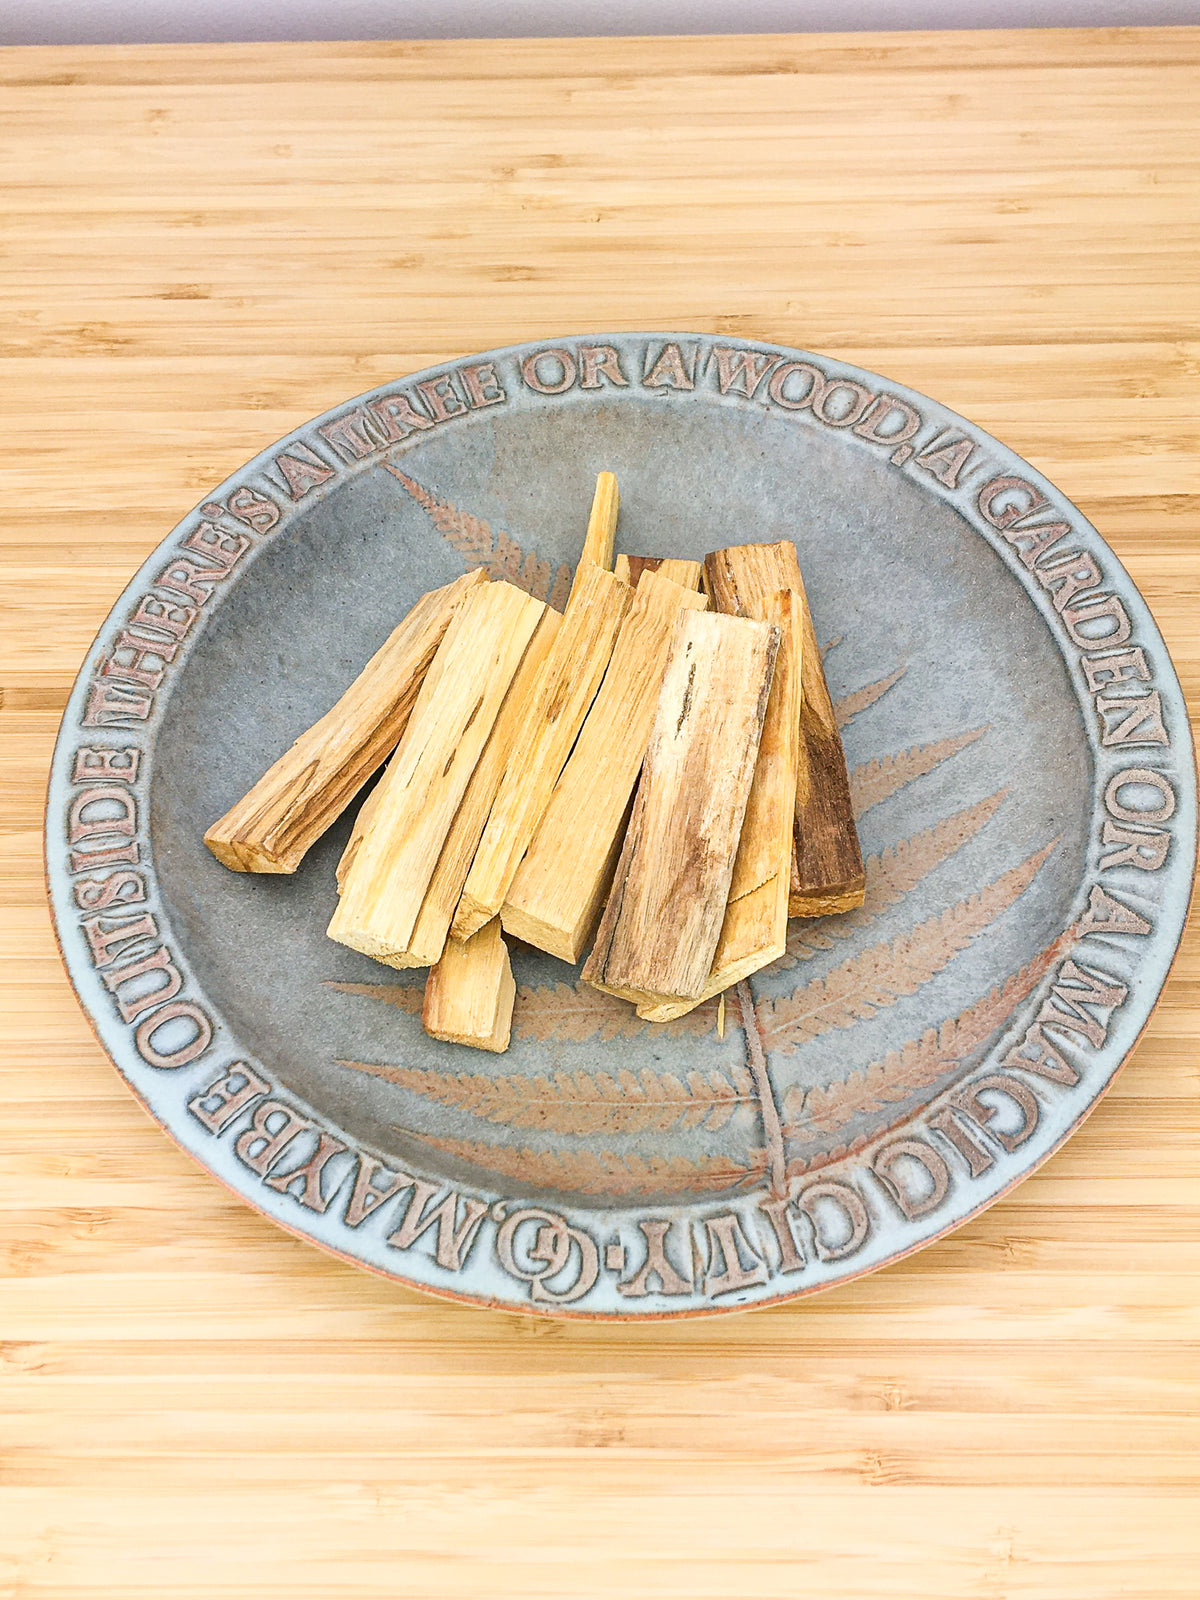 Stick sod Palo Santo (an aromatic wood) on a ceramic plate